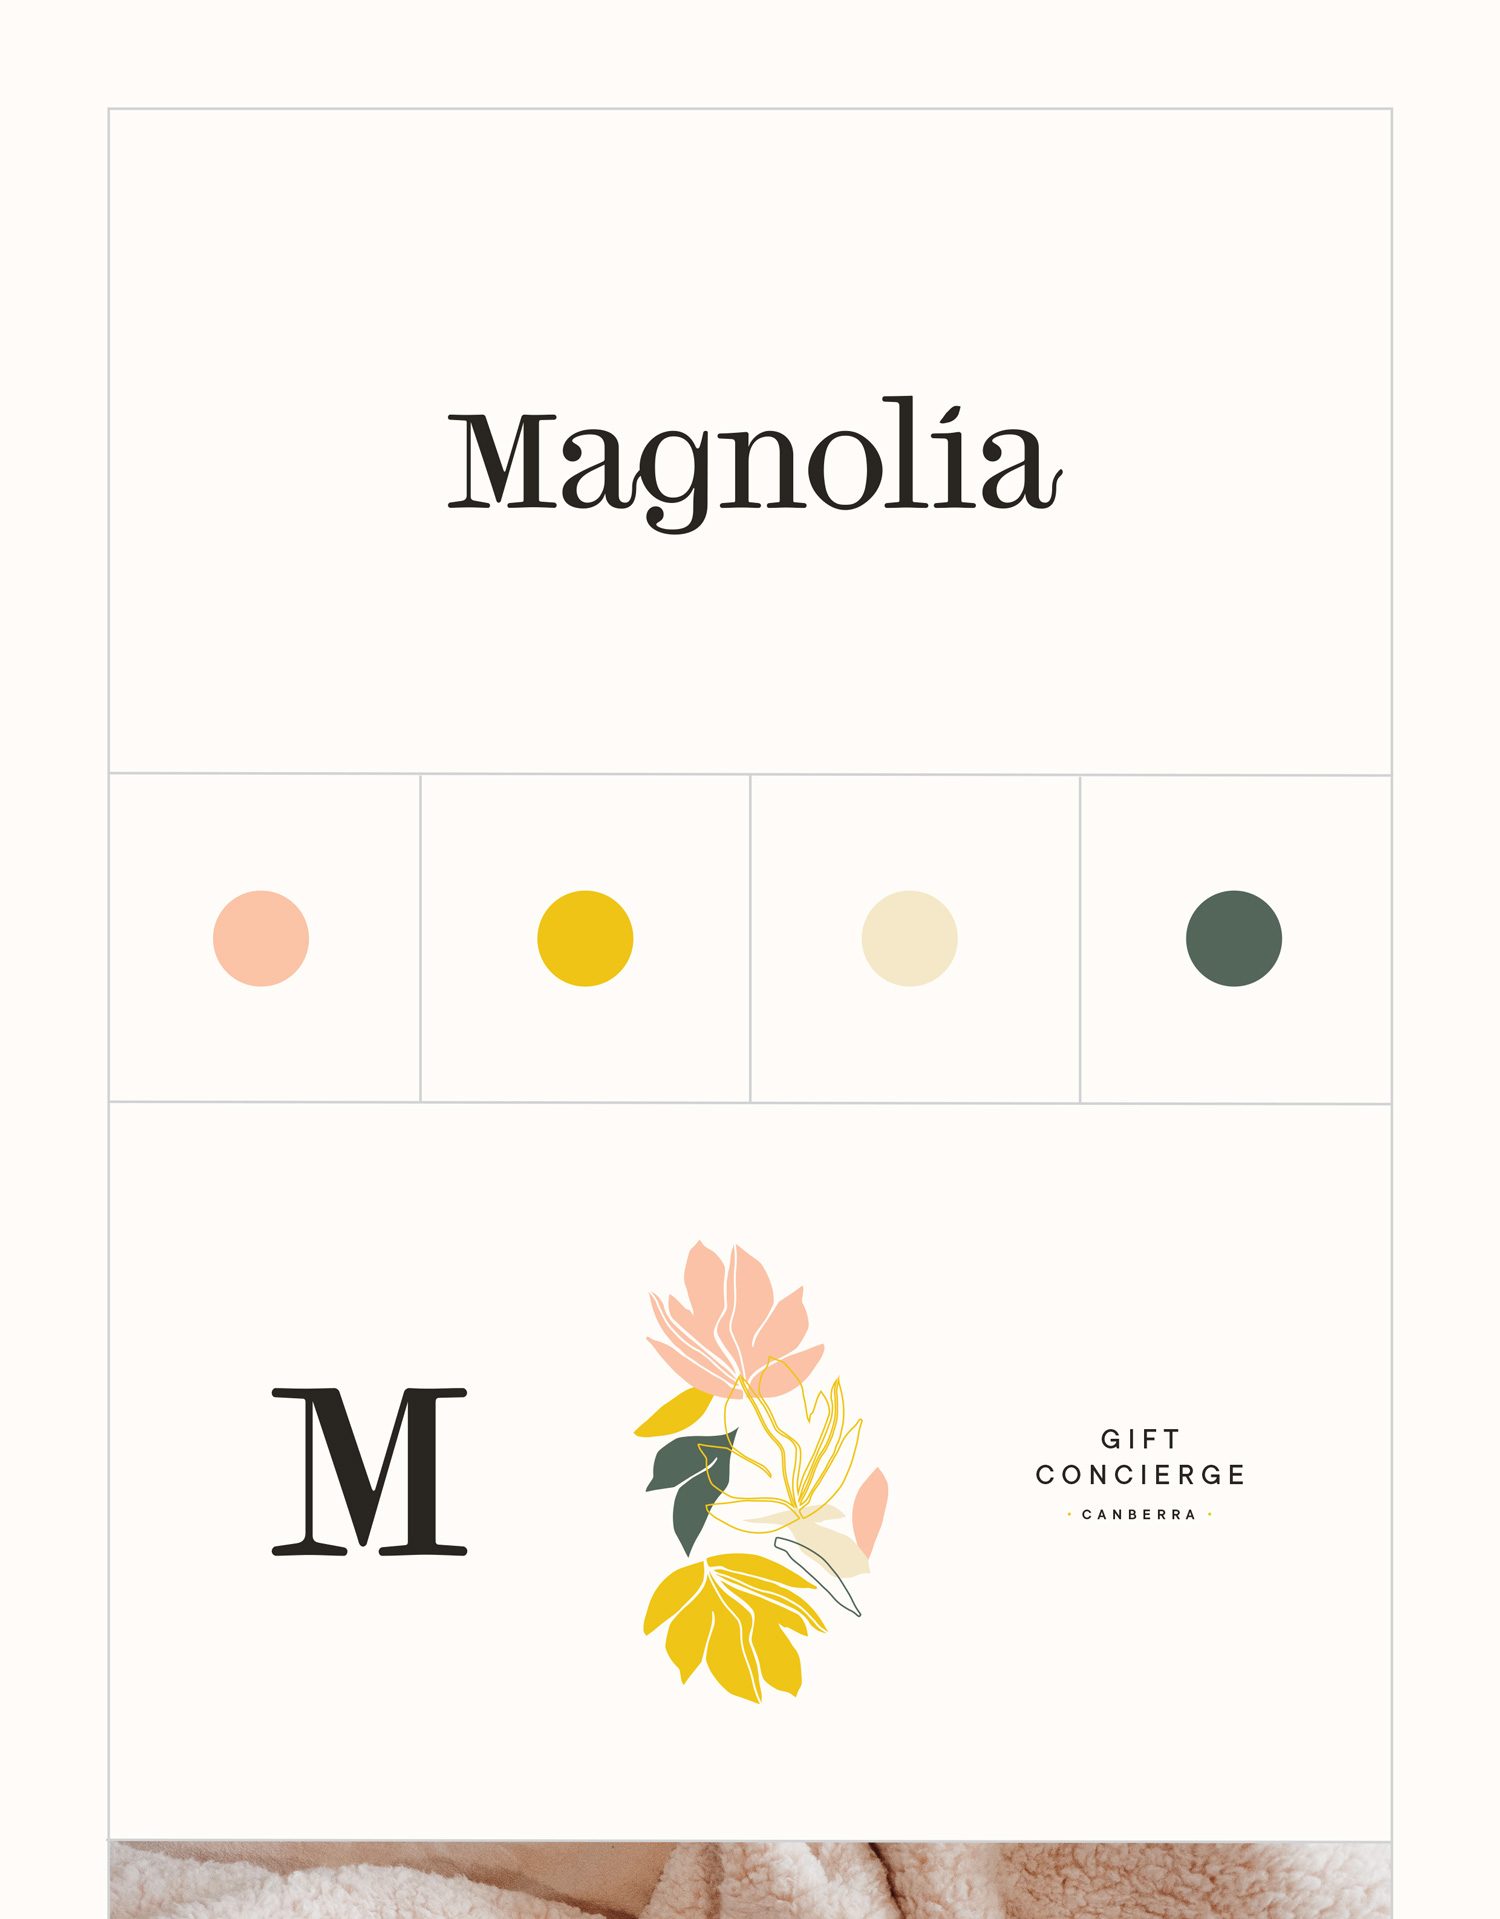 Magnolia brand kit by Leysa Flores Design